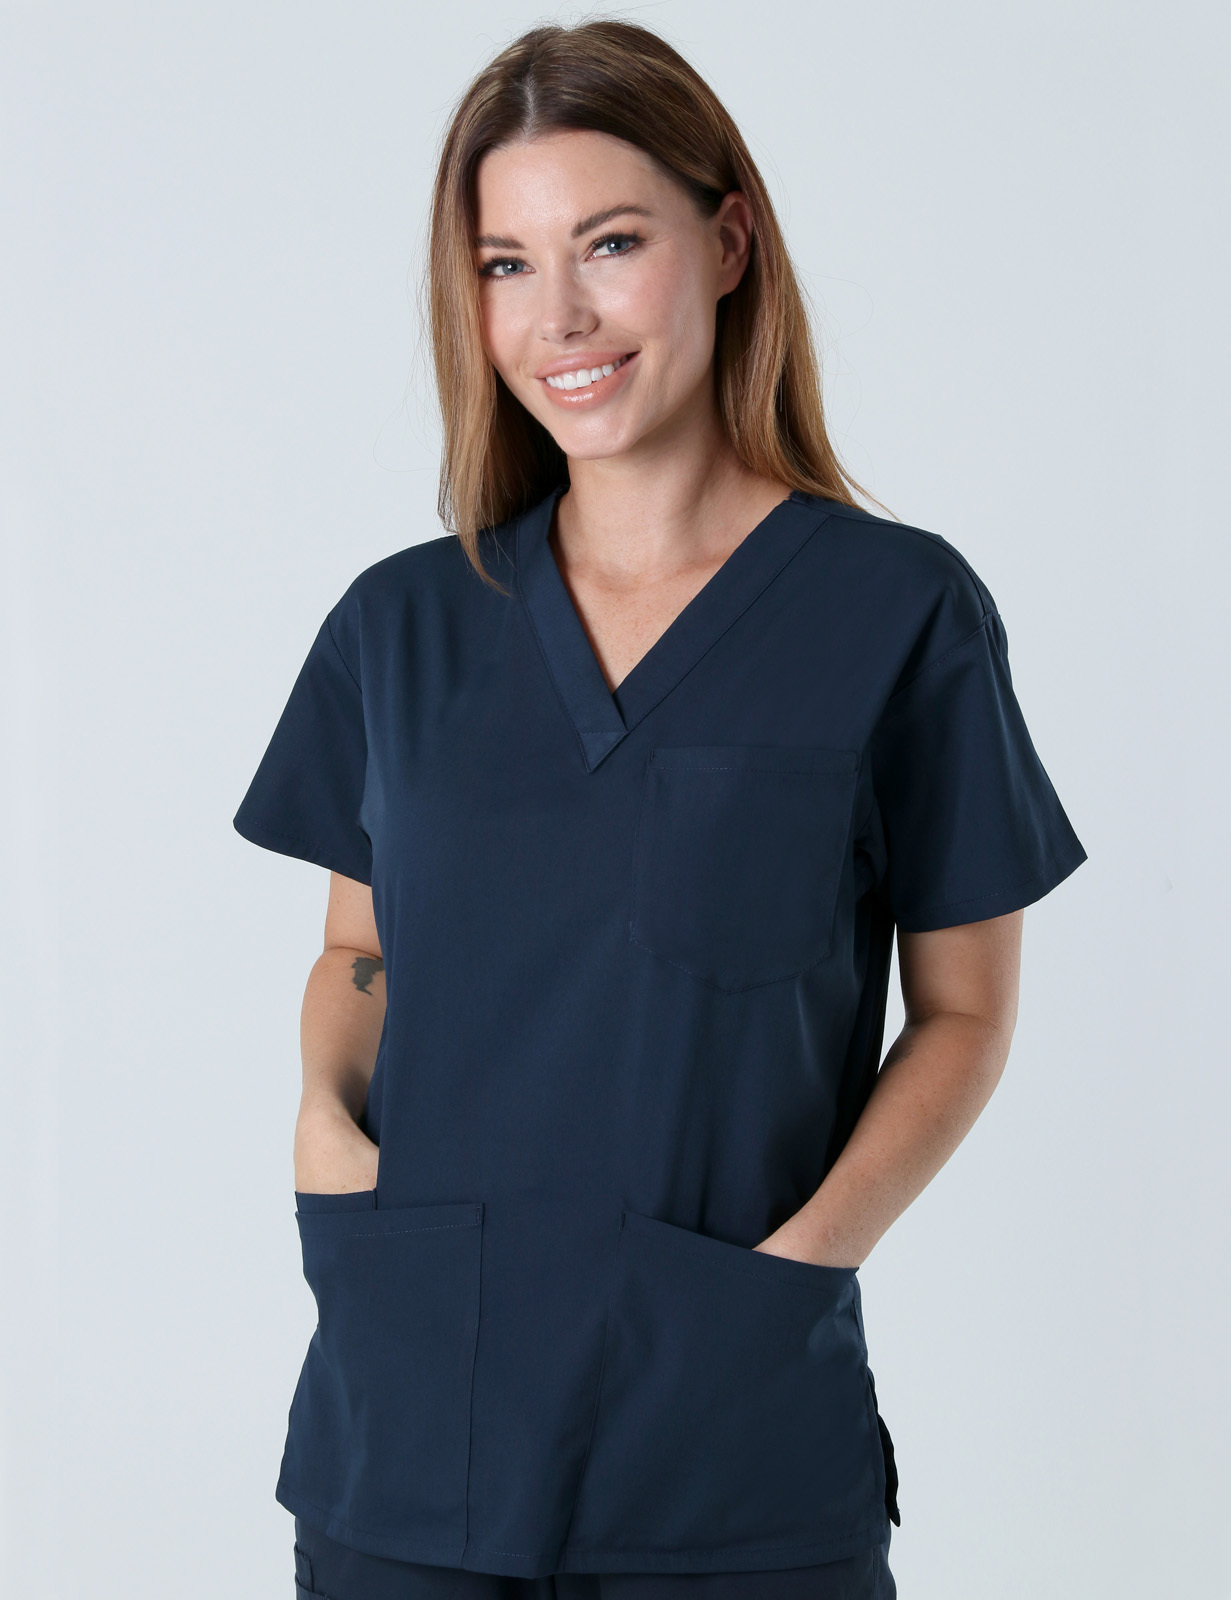 Royal Hobart Hospital - Emergency Doctor (4 Pocket Scrub Top in Navy and Cargo Pants incl Logos)